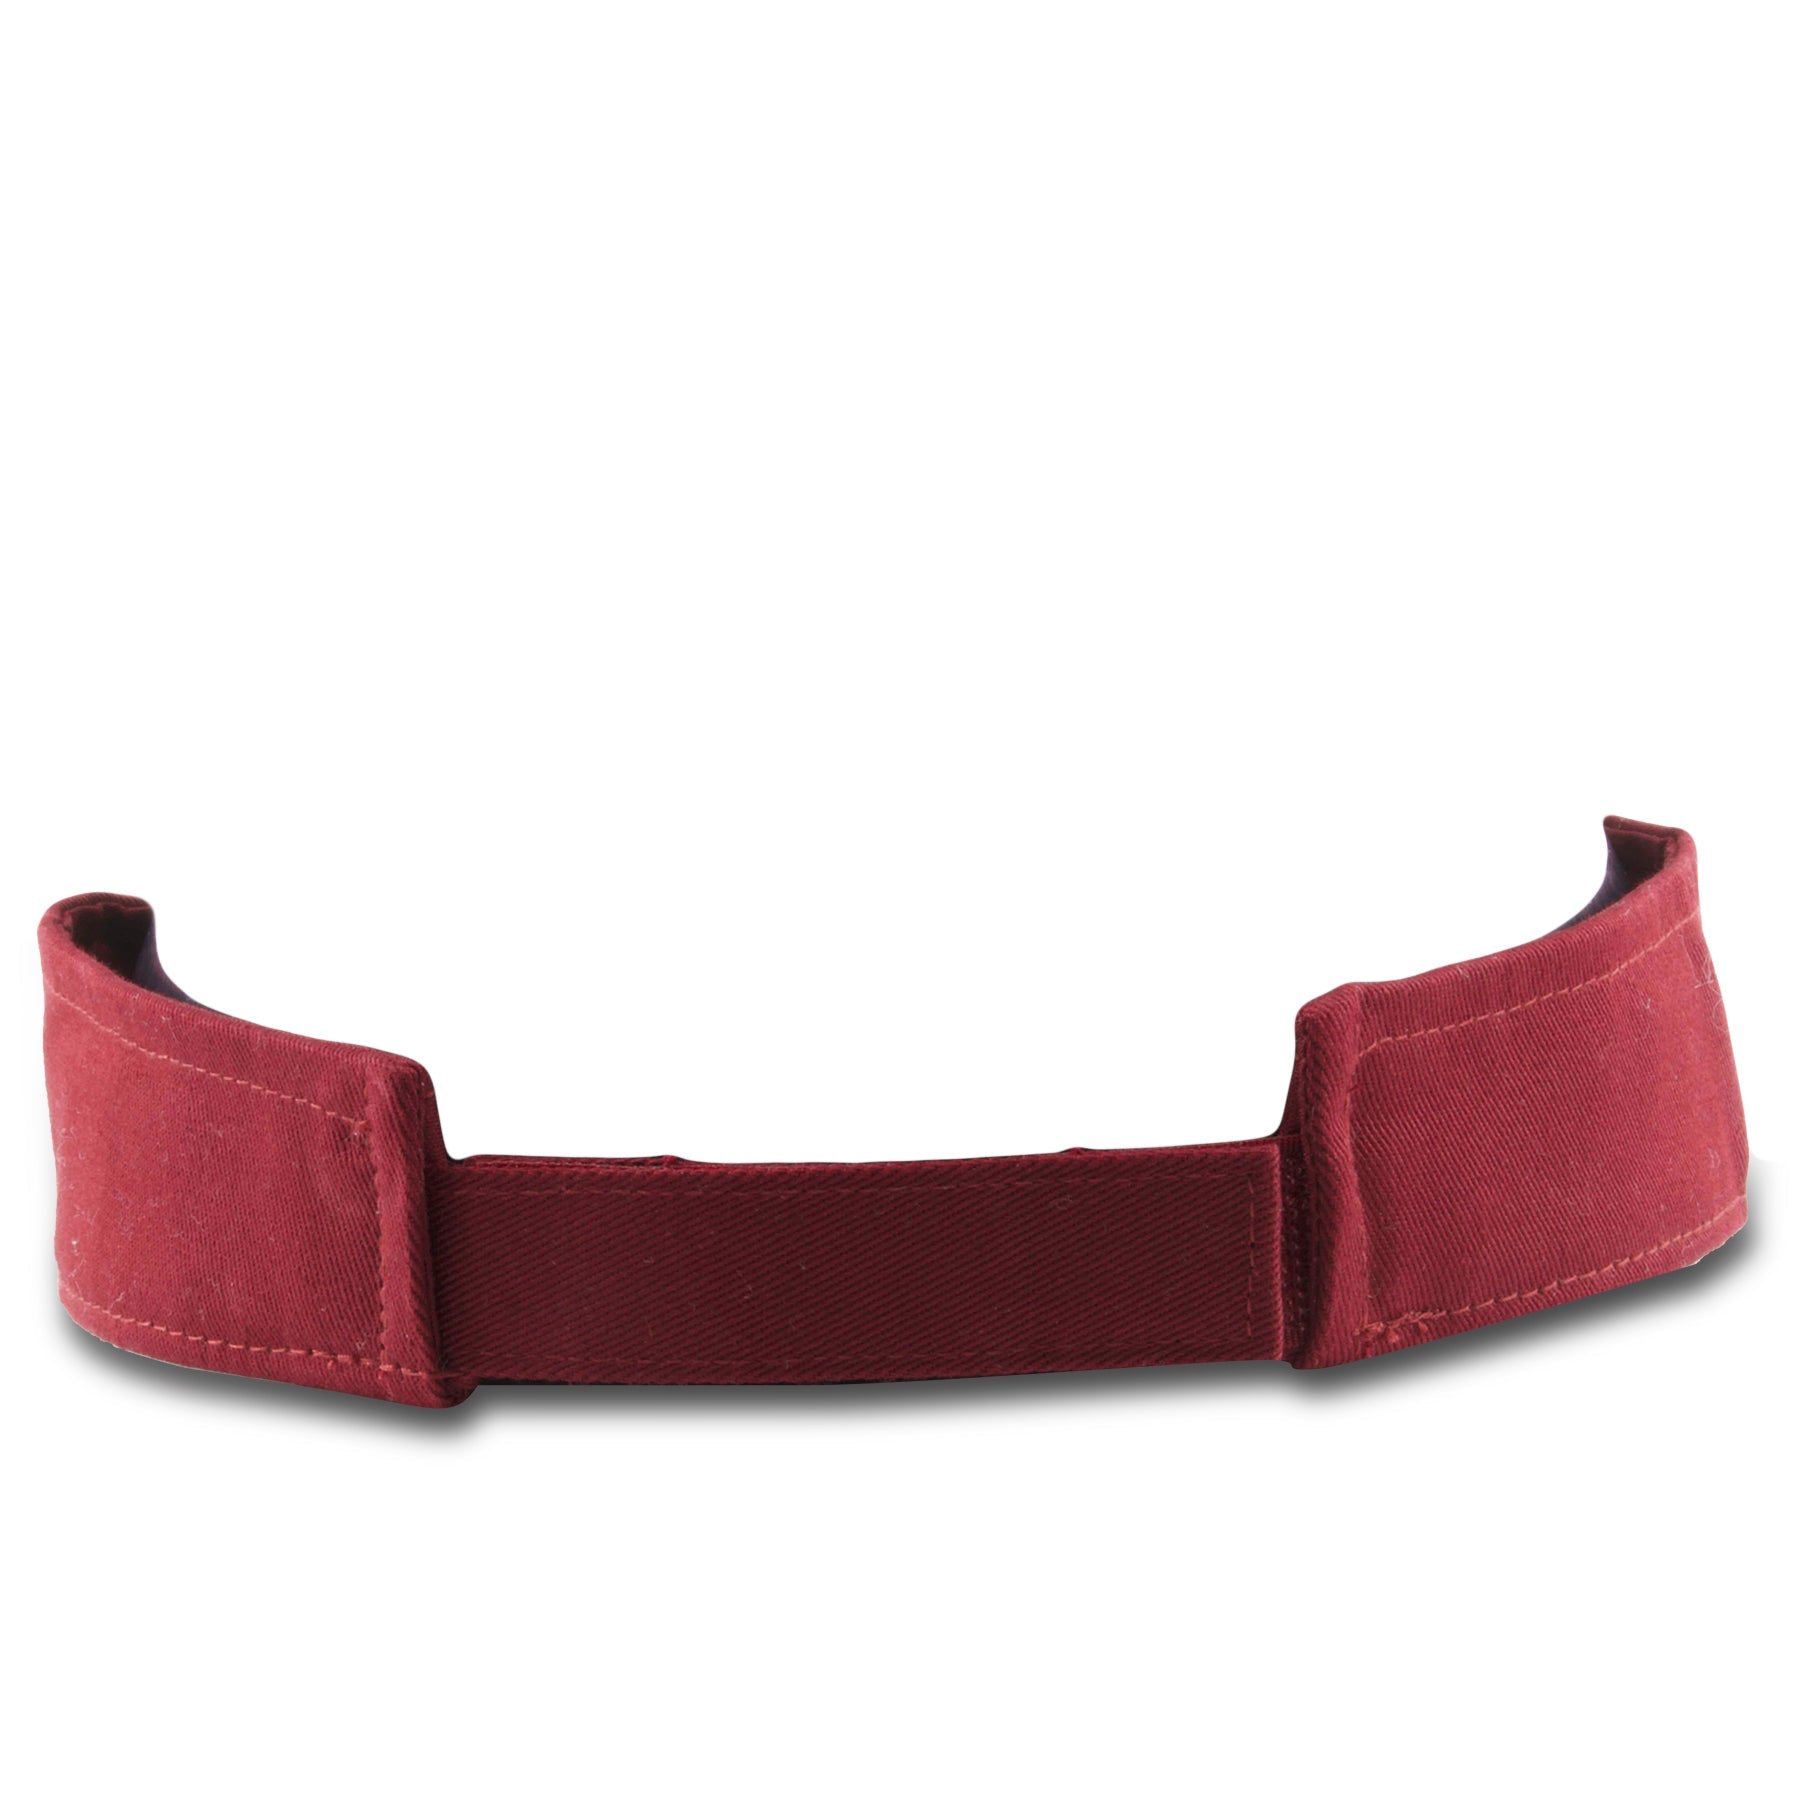 On the back of the burgundy blank adjustable visor is a burgundy adjustable velcro strap